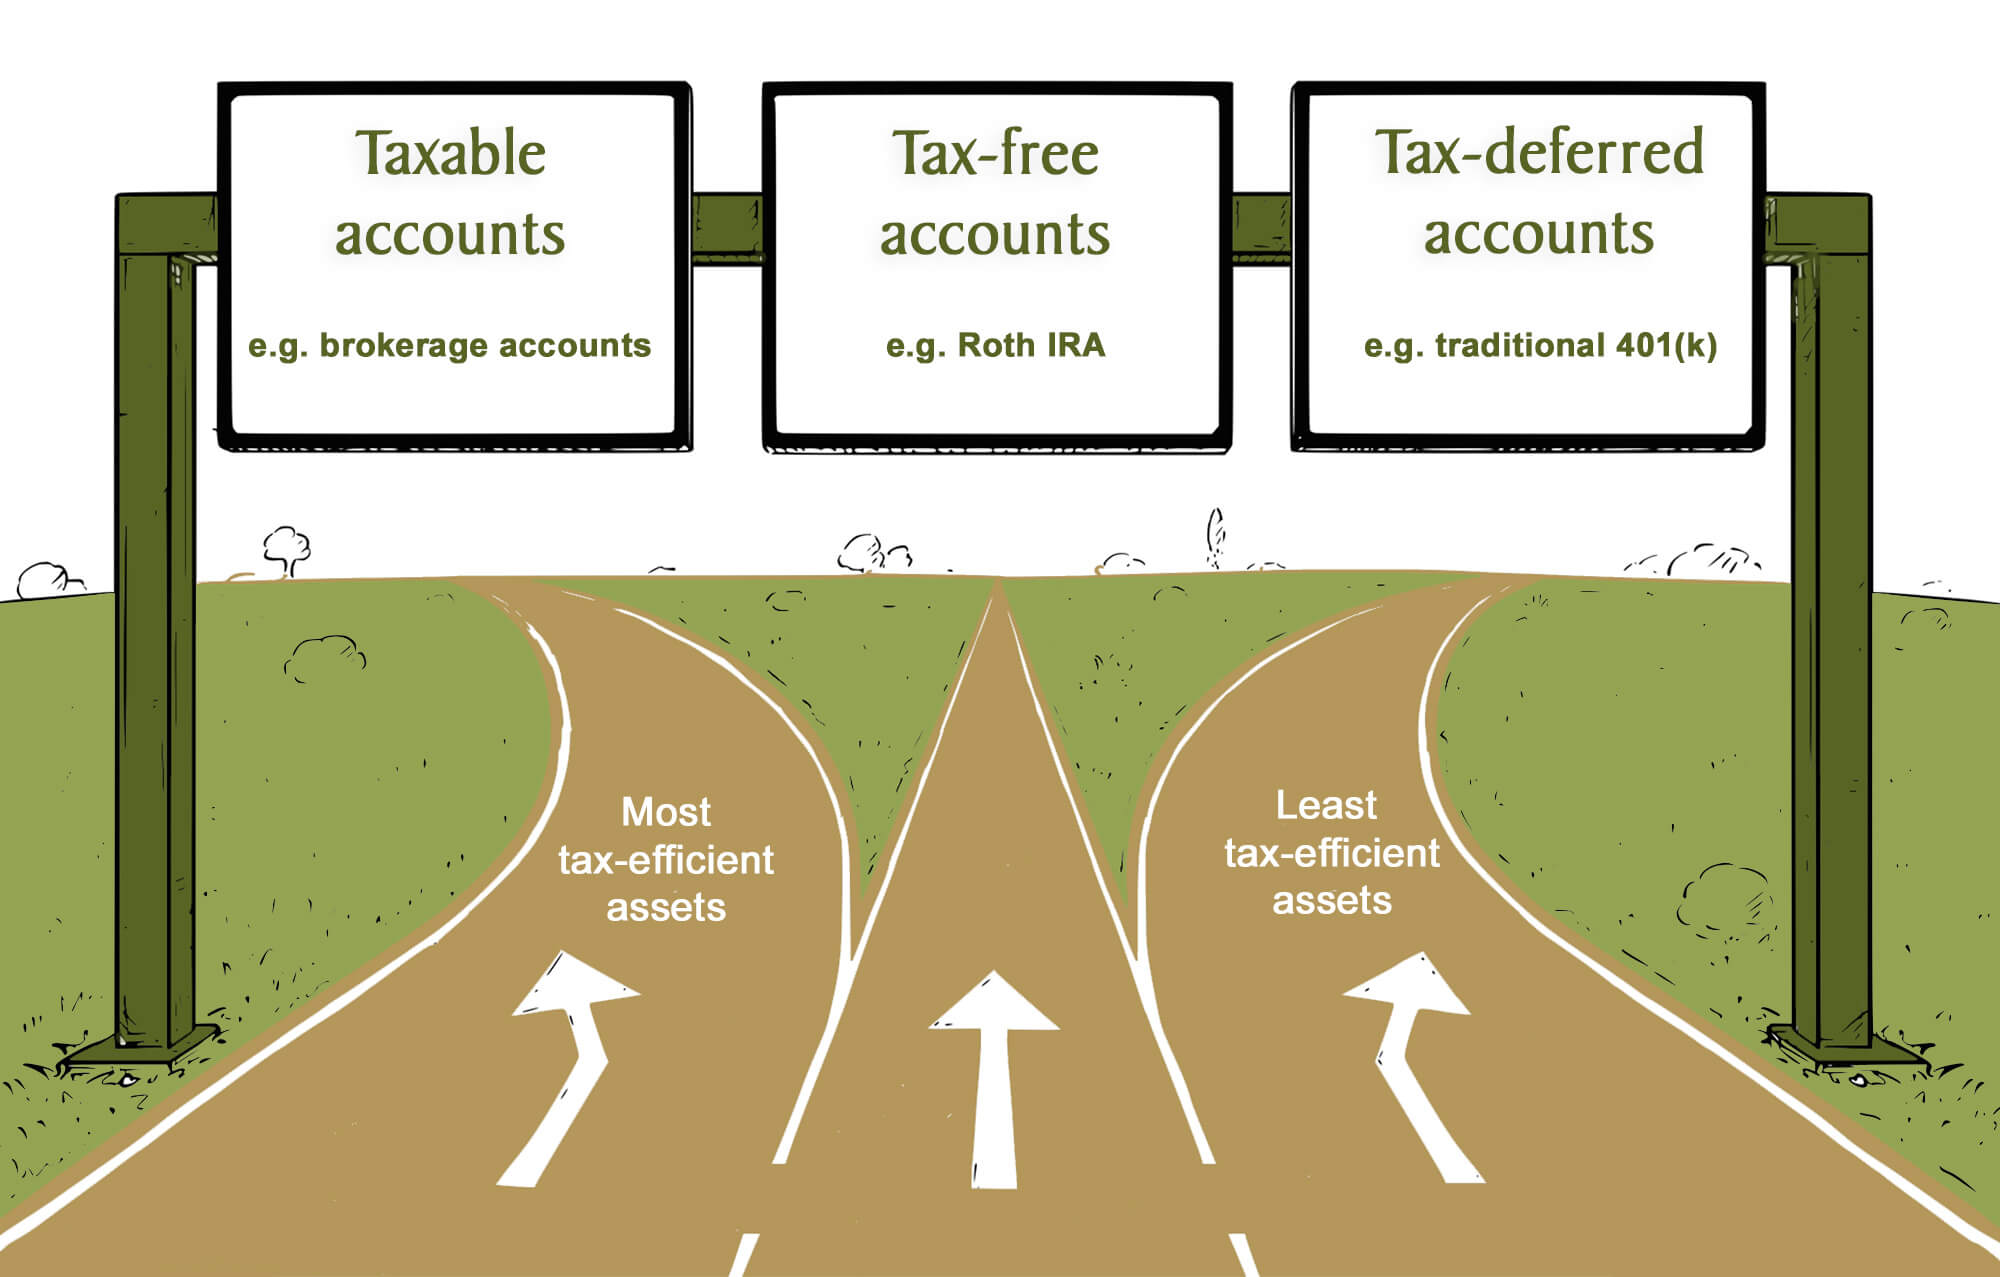 road signs for taxable accounts, tax-advantaged accounts and tax-deferreda ccounts